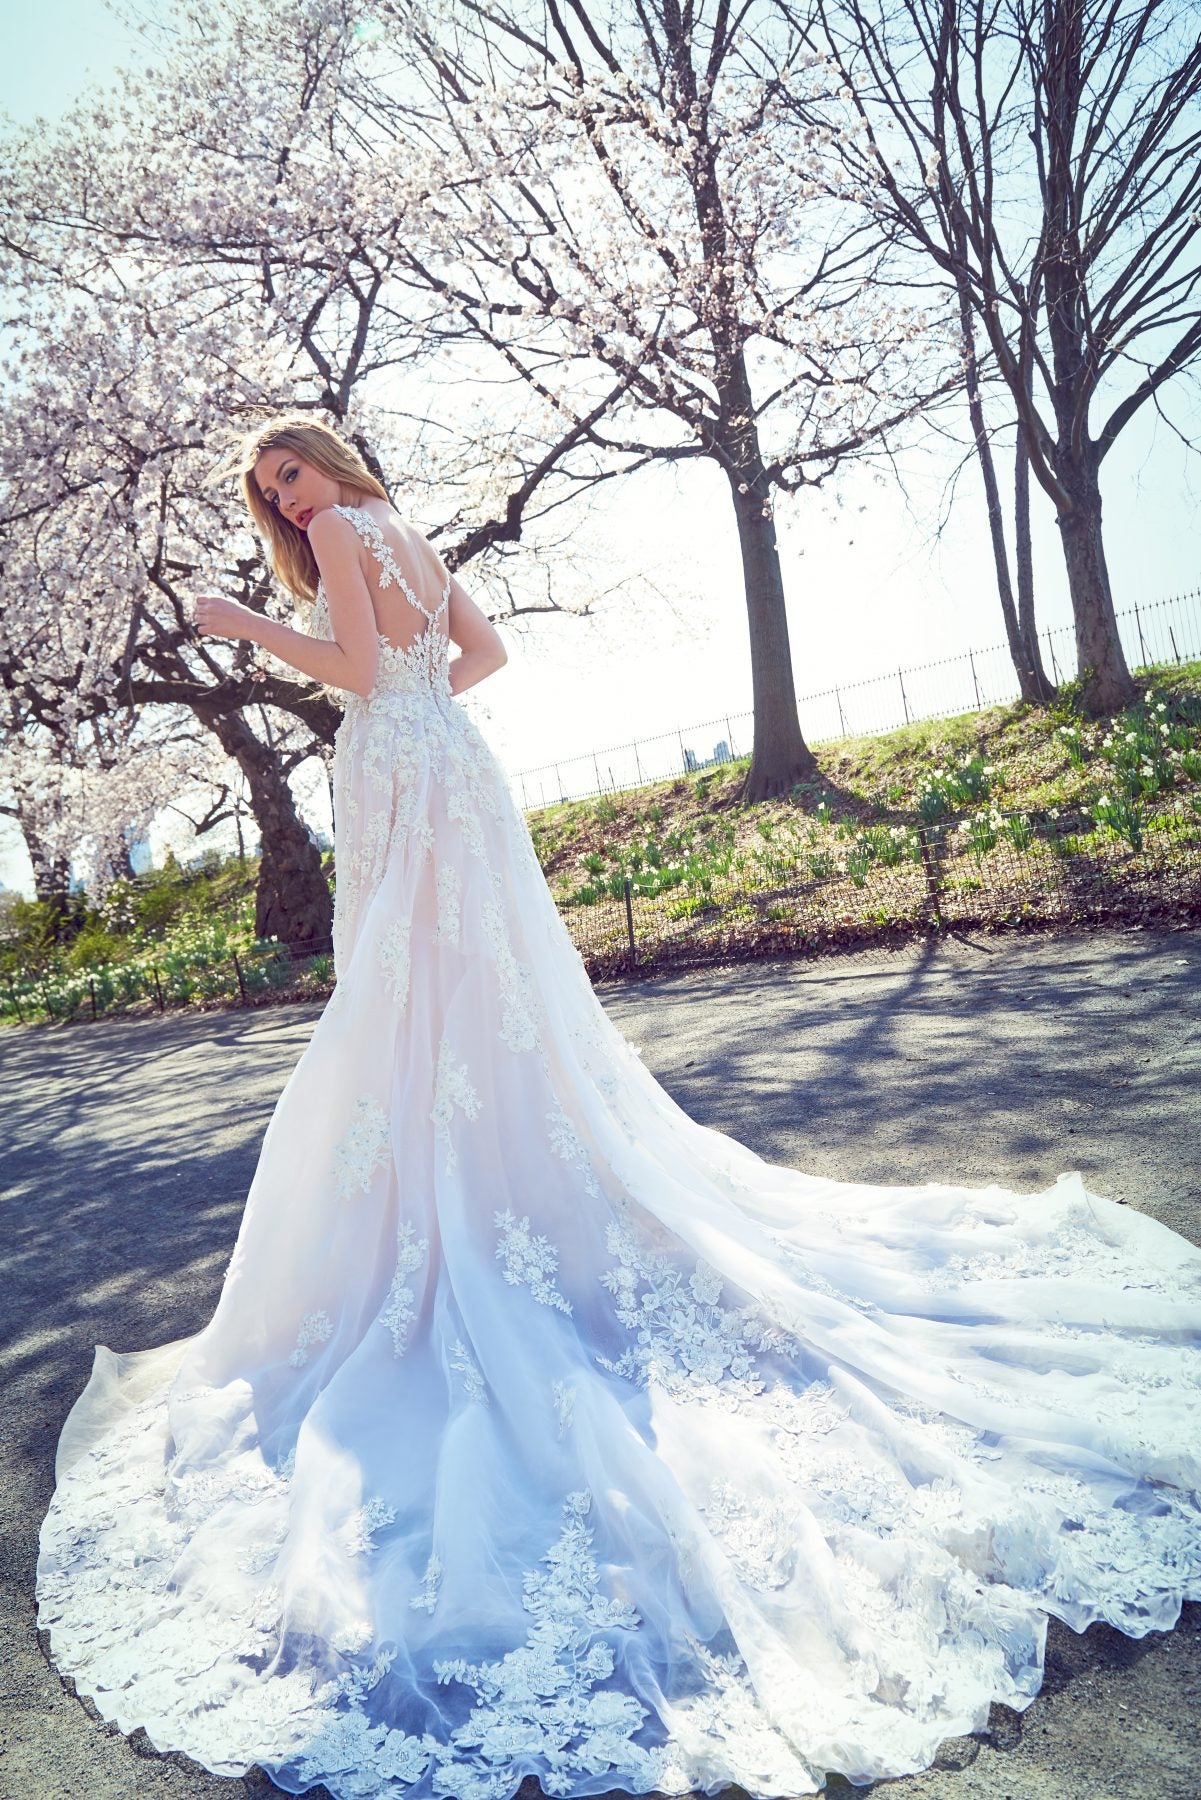 ysa-makino-sleeveless-floral-embroidered-sheath-wedding-dress-33864638-1-1201x1800.jpg